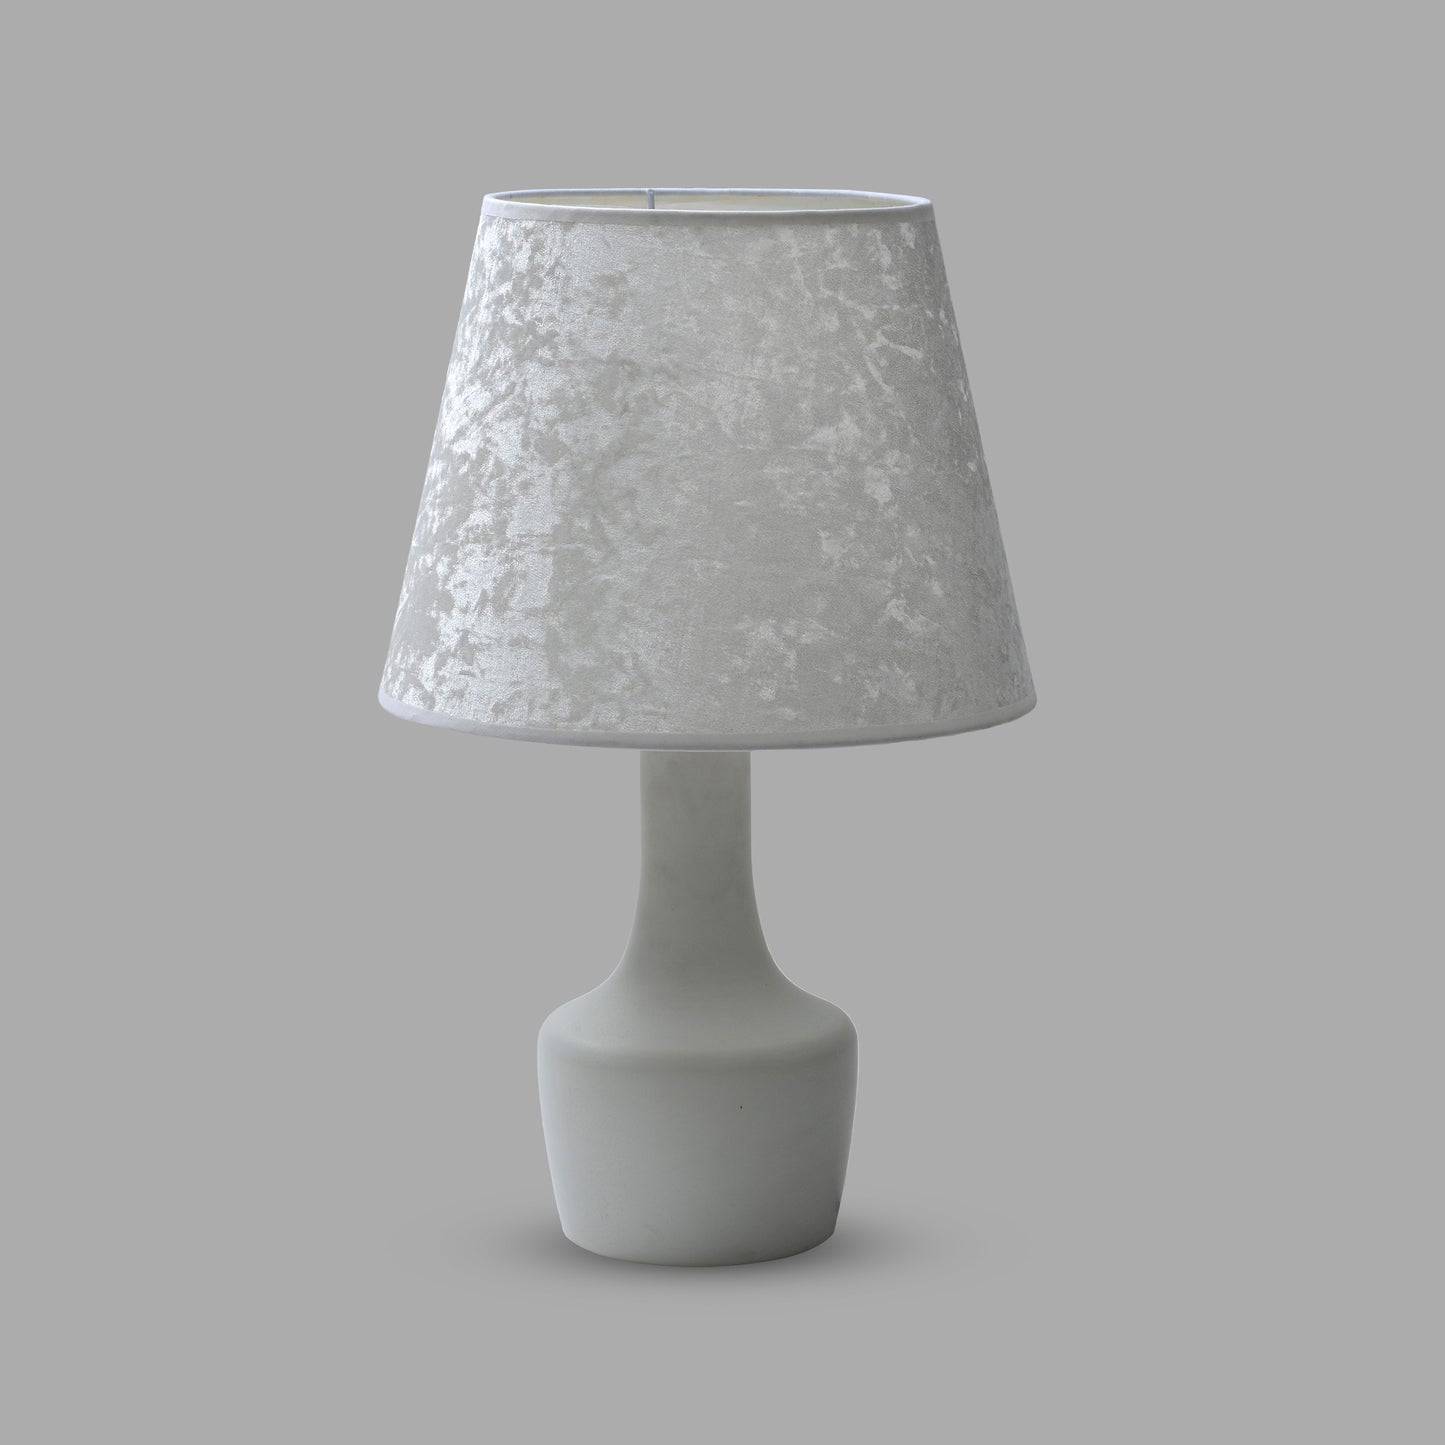 Mat White Cramic Base Table Lamp with Shade